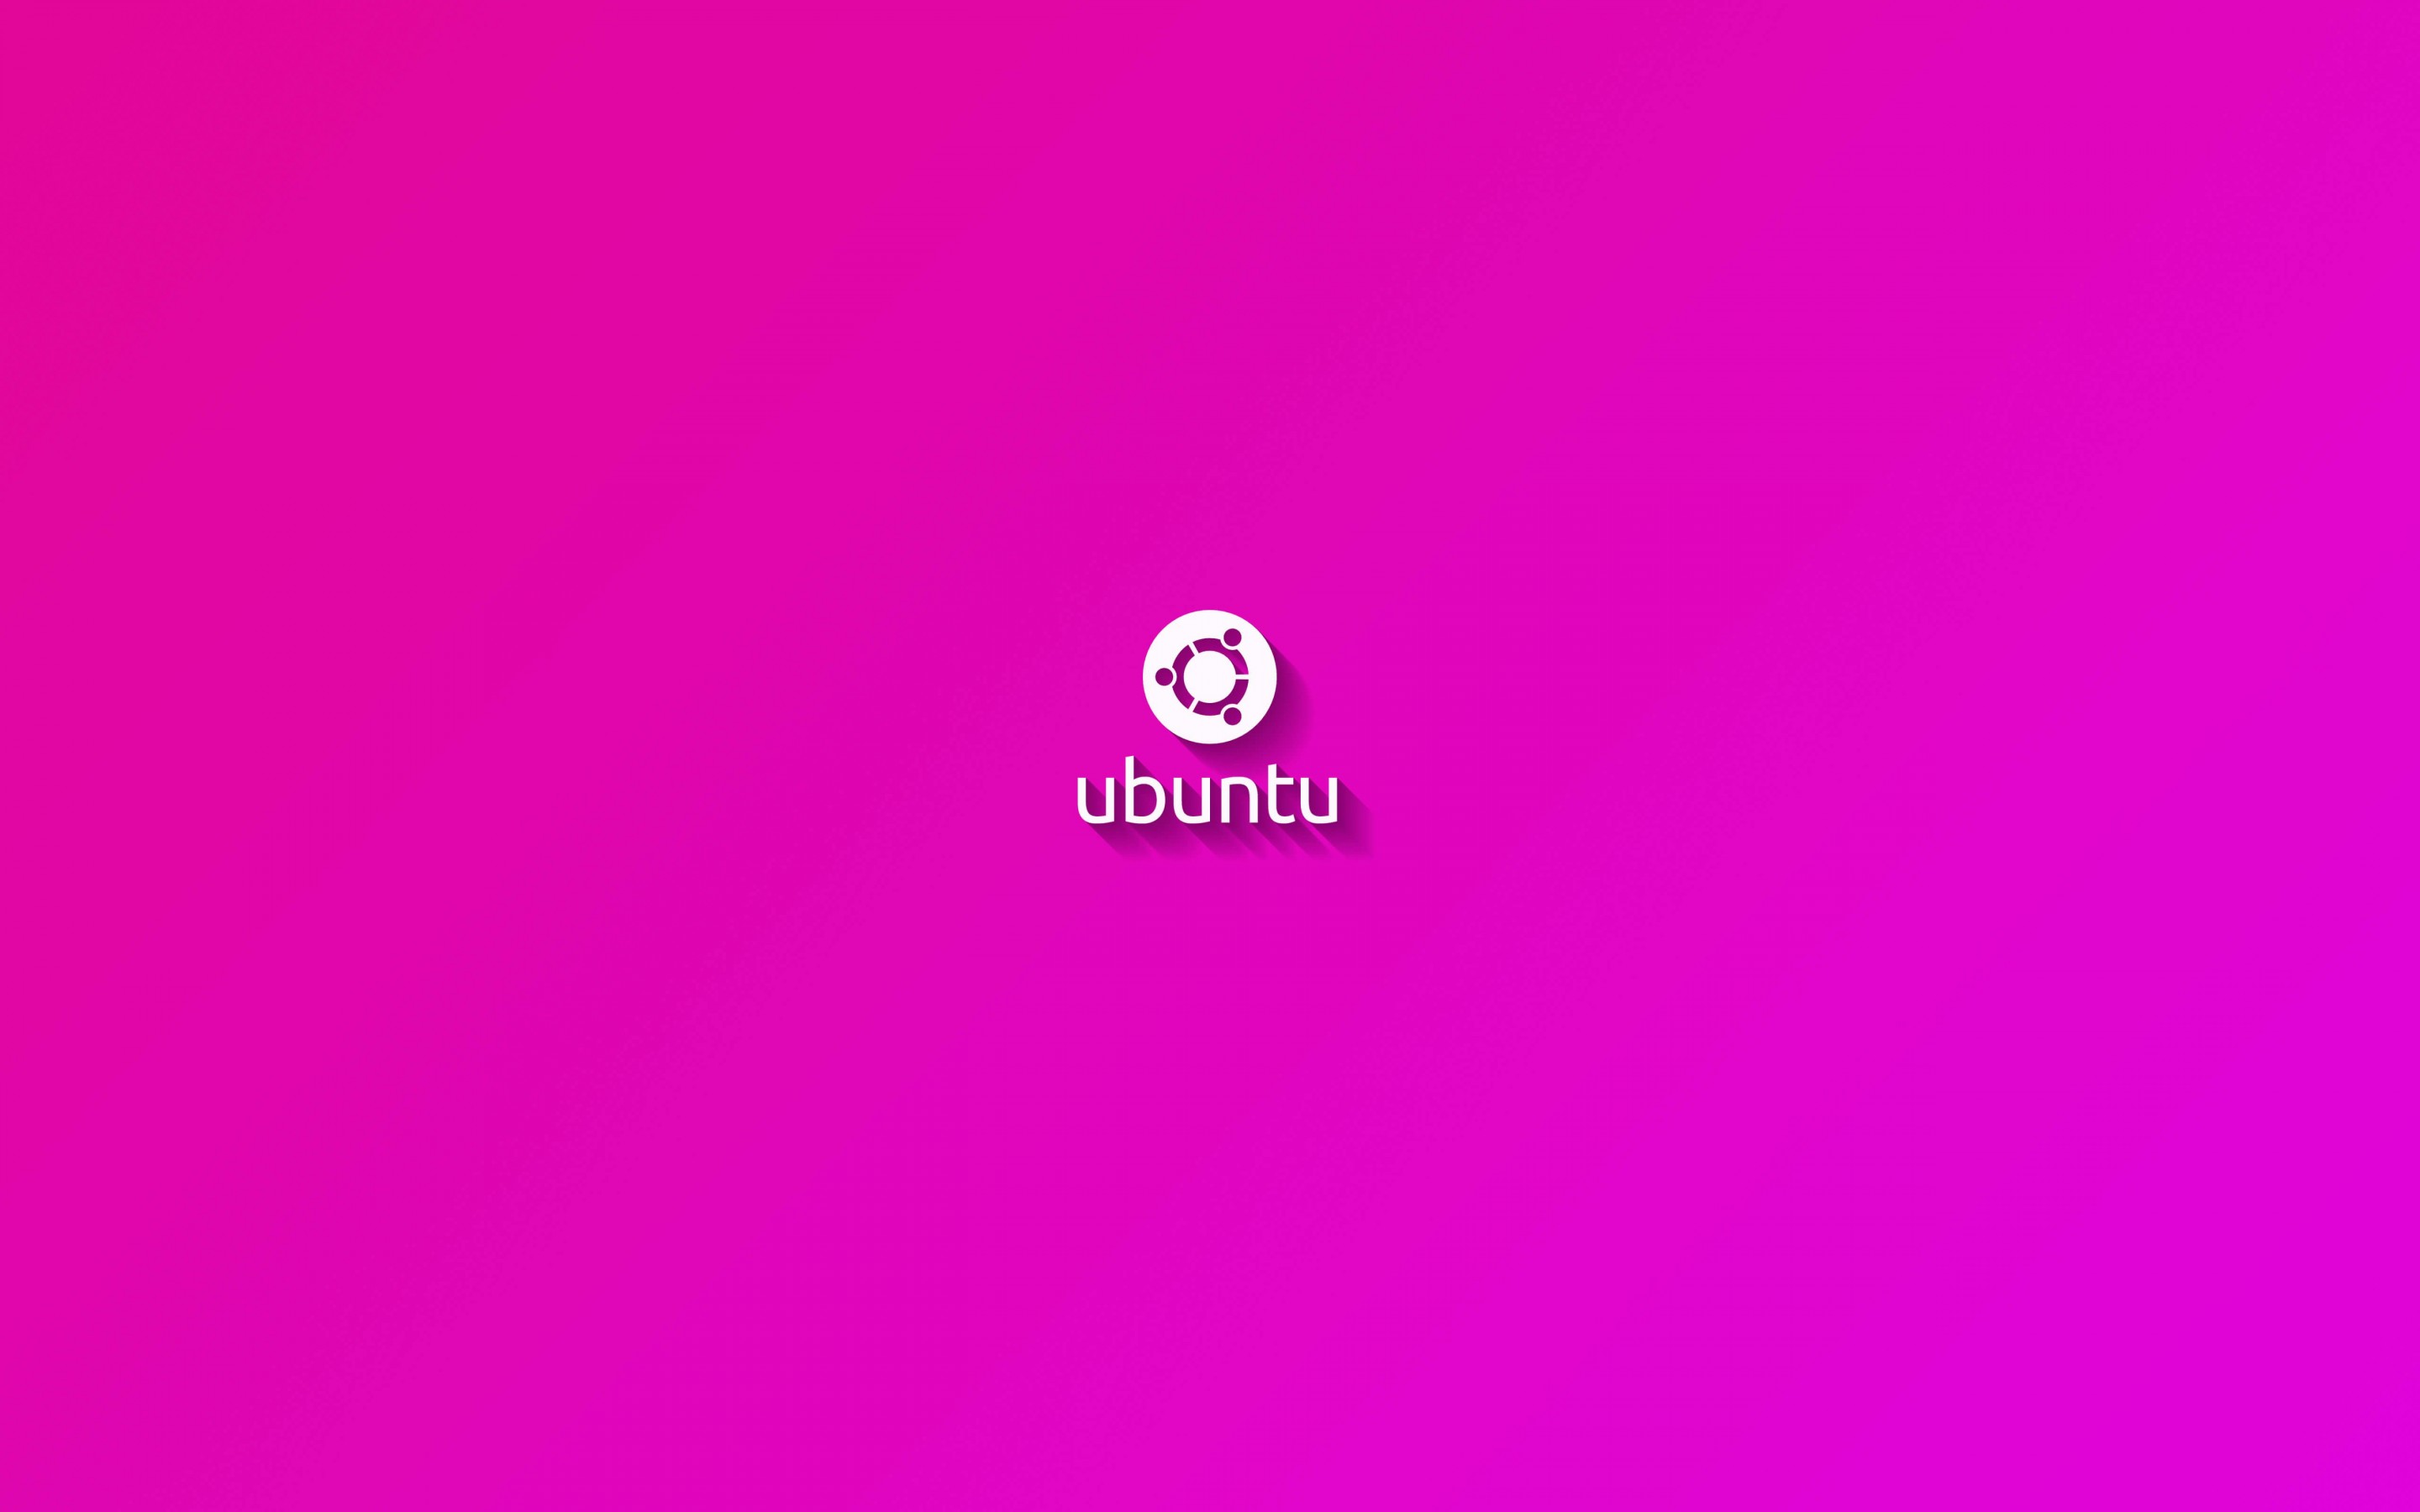 Ubuntu Flat Shadow Pink Wallpaper for Desktop 2880x1800